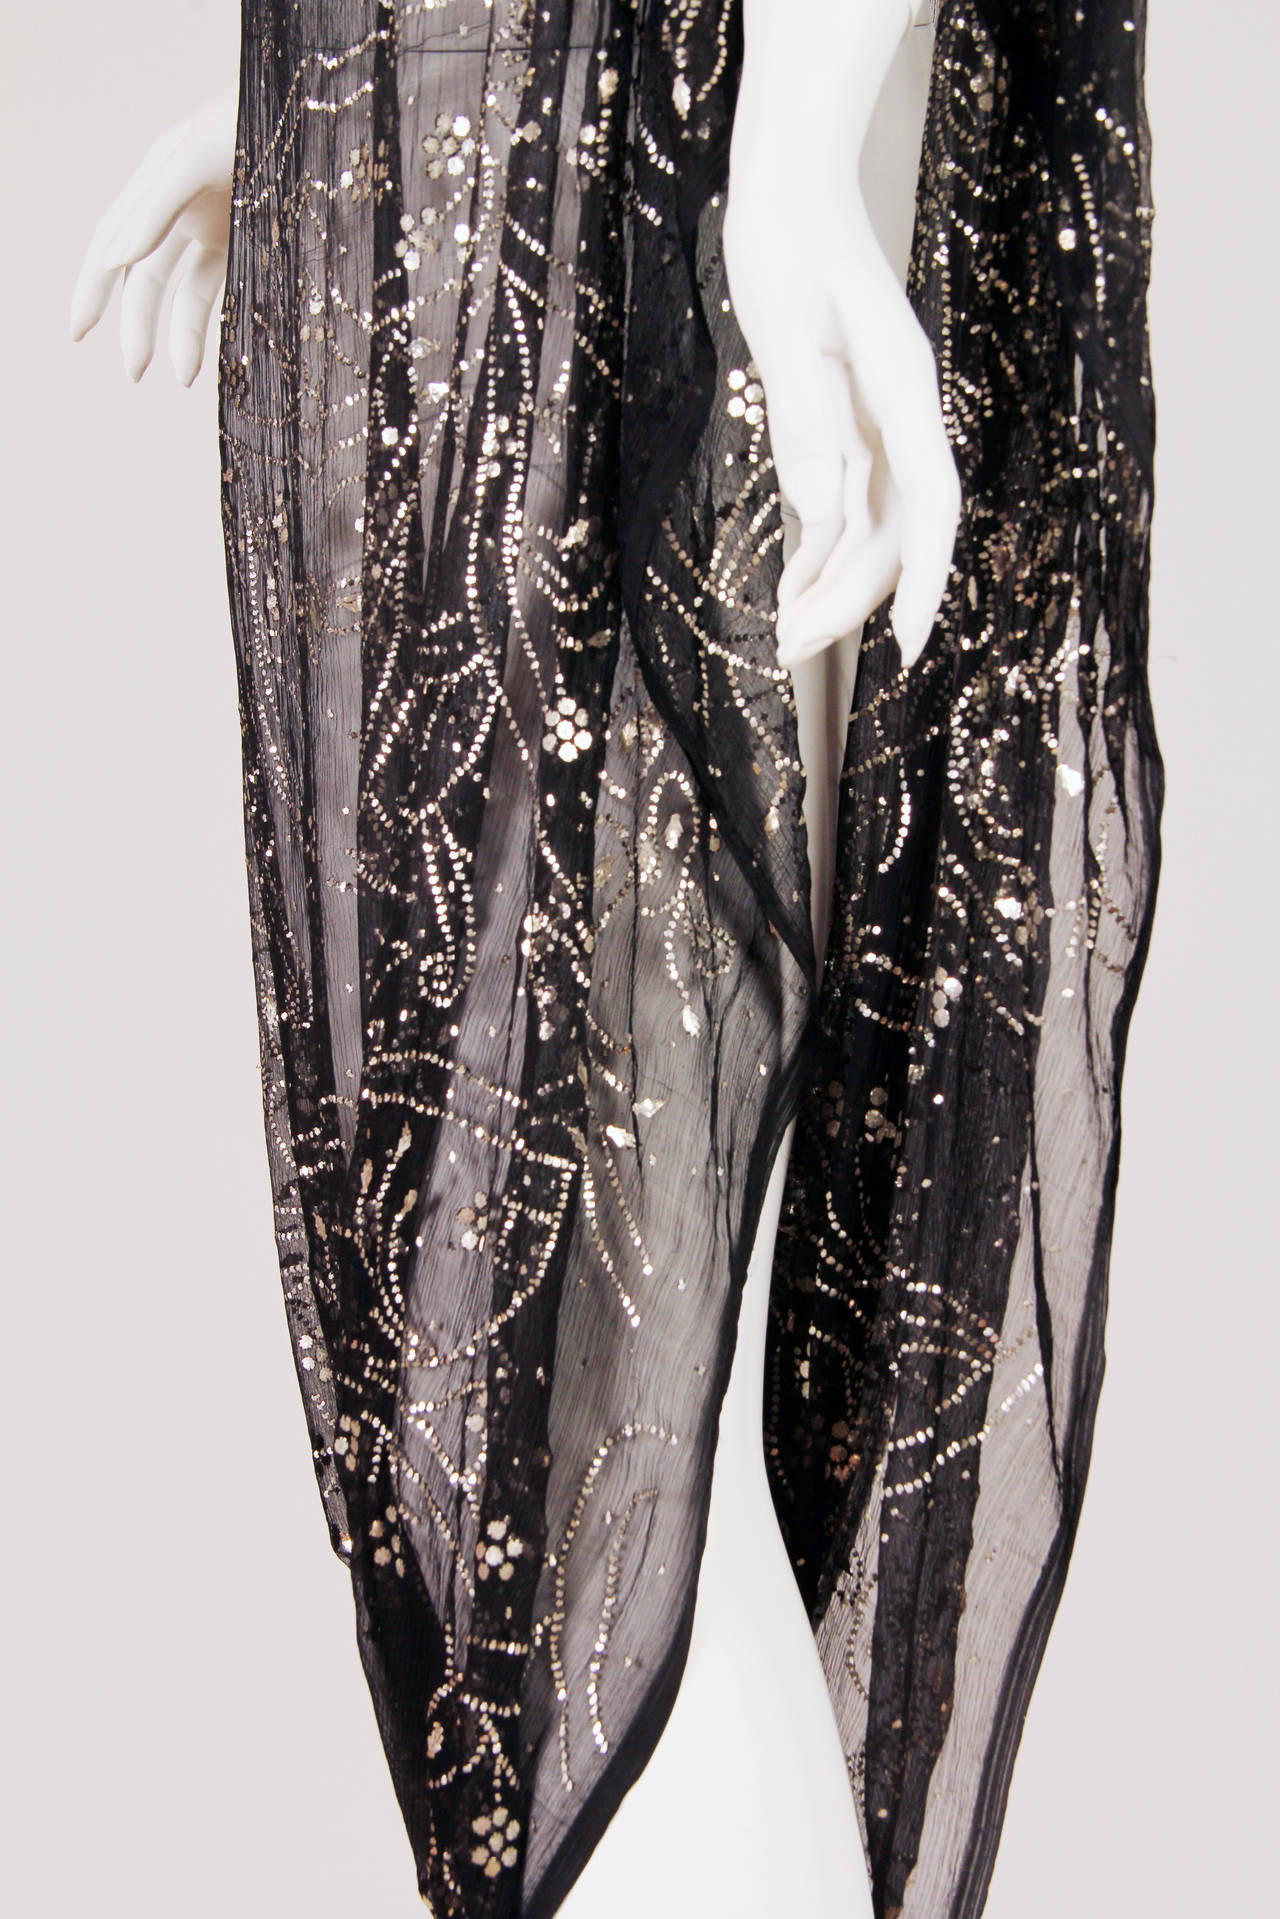 Interesting 1920s Assuit Technique Silk Chiffon Tunic Dress from Asyut Egypt 1